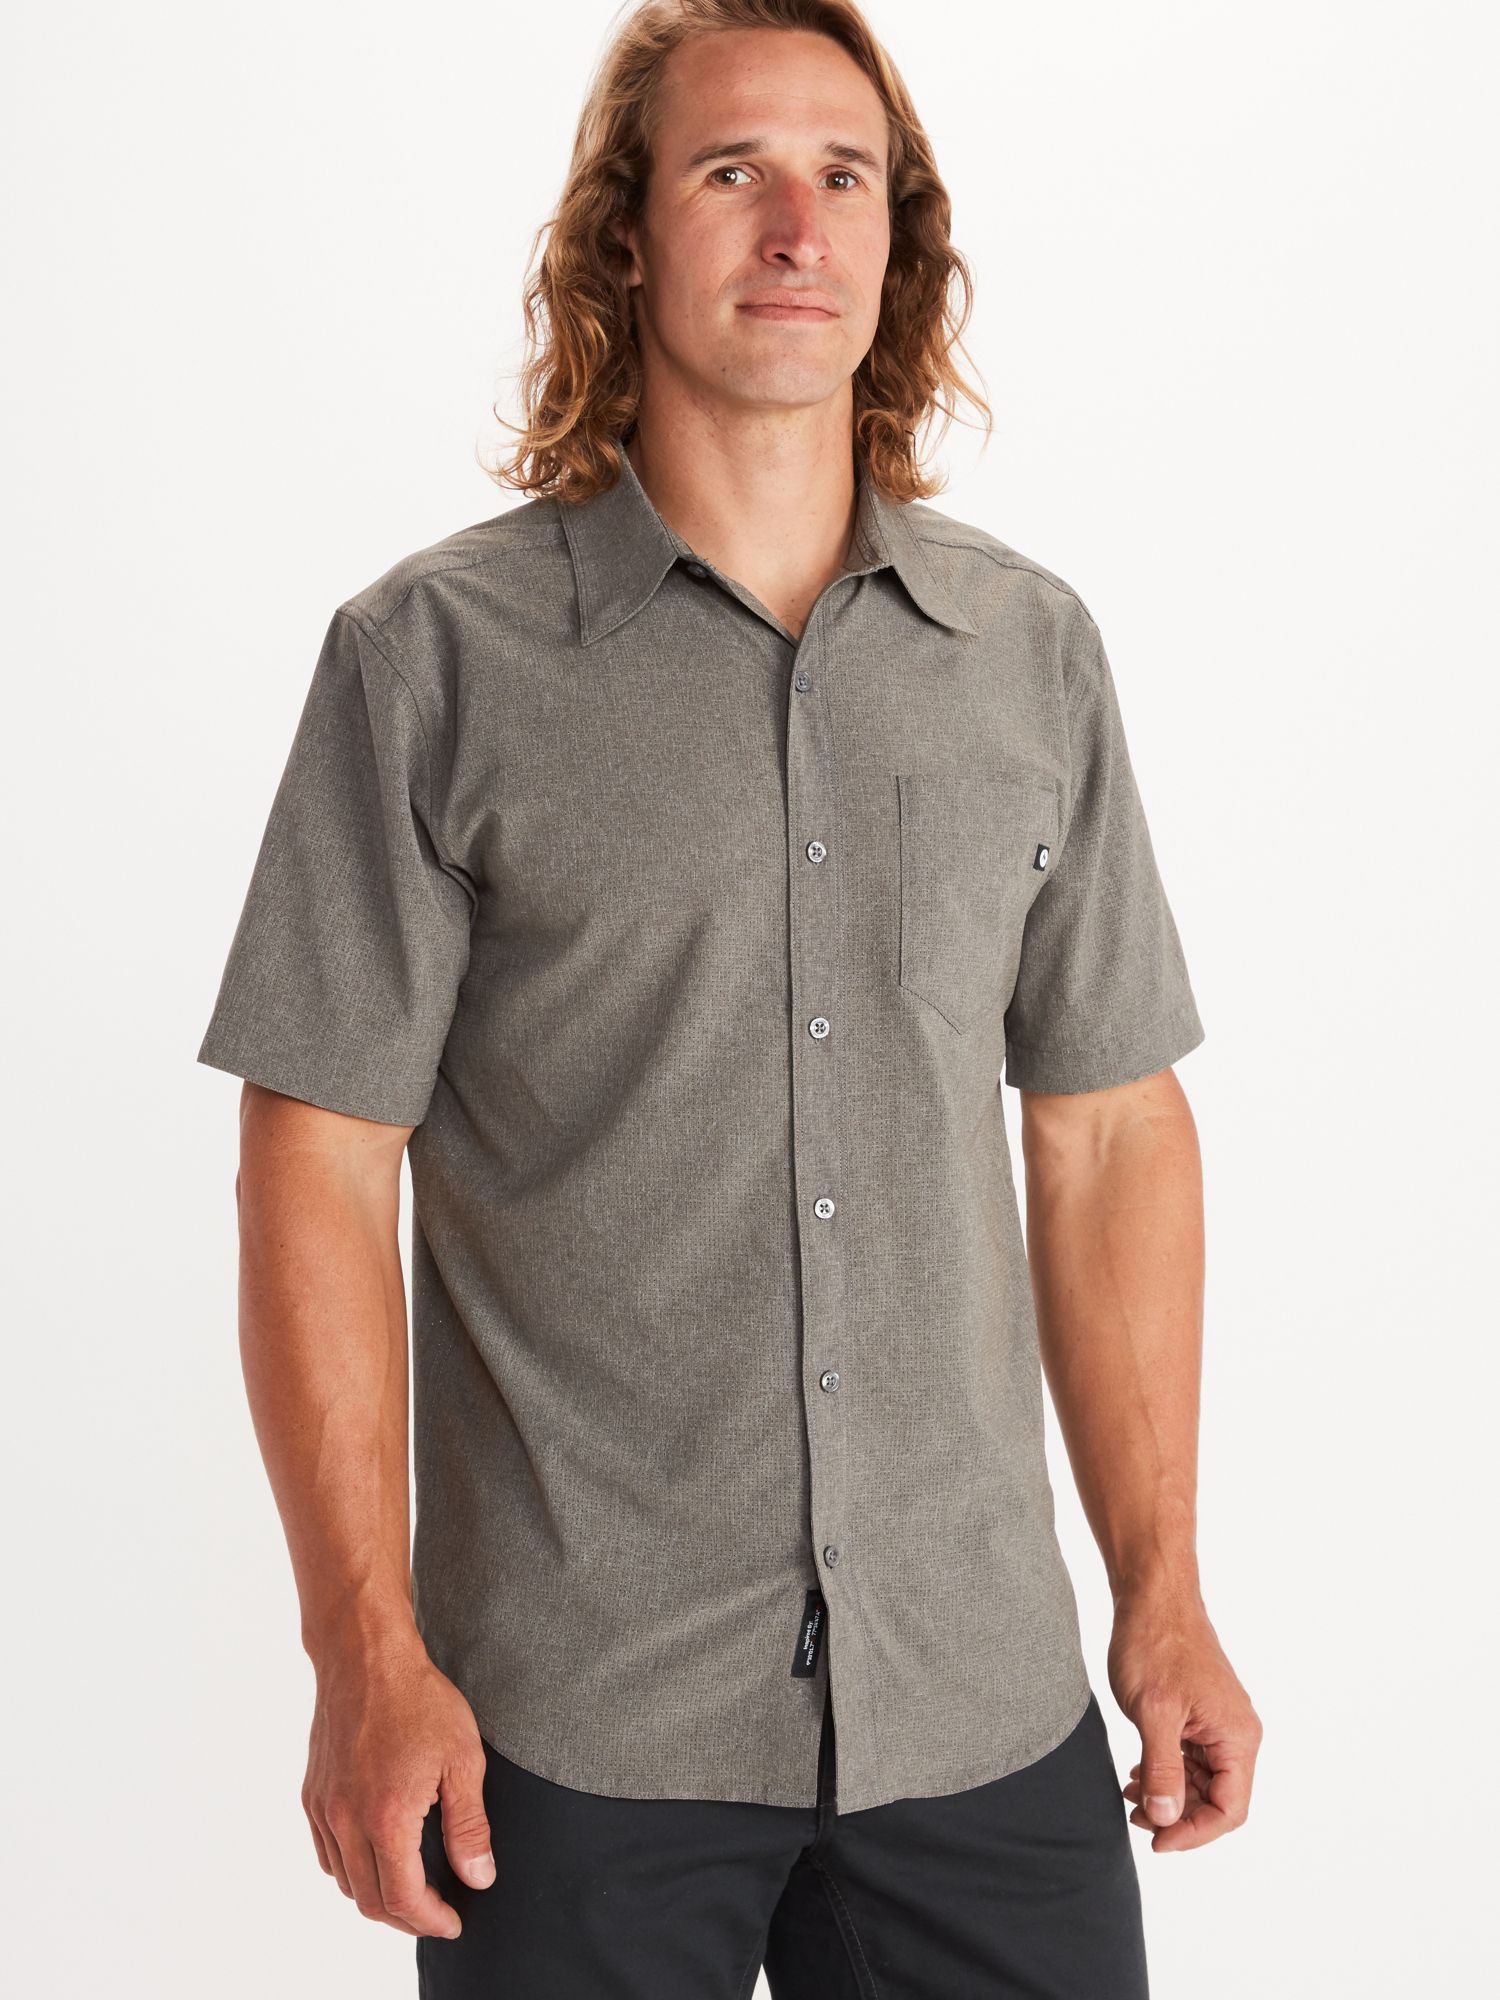 Men's Aerobora Short-Sleeve Shirt - Big